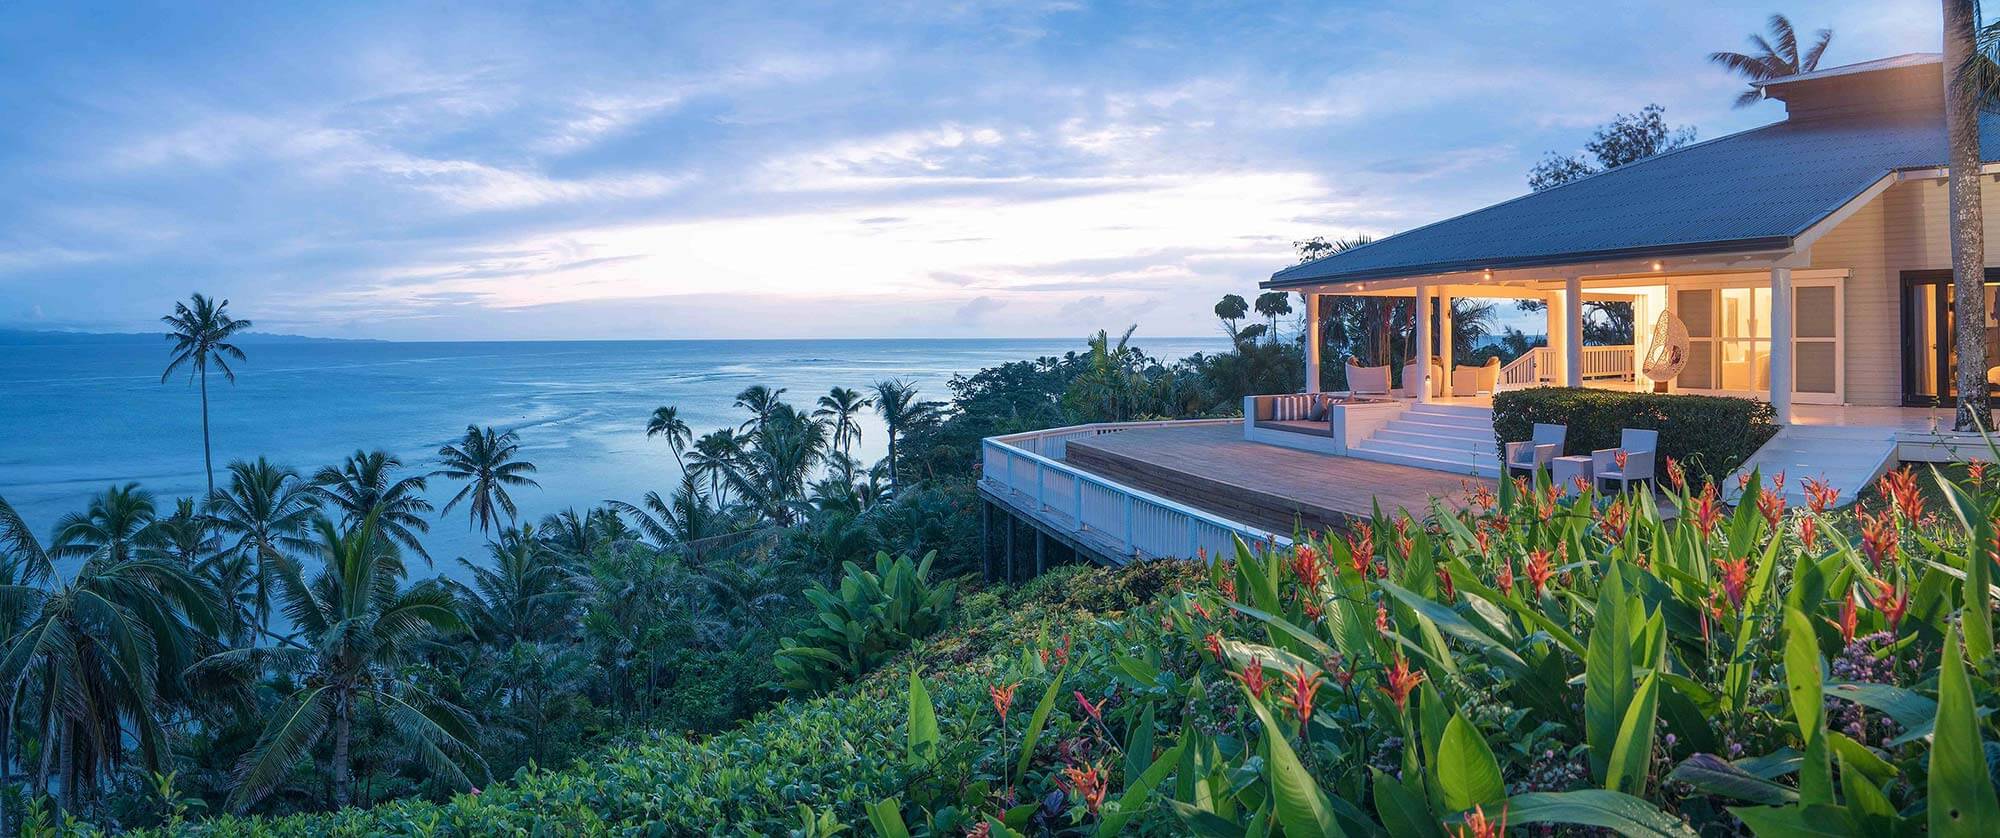 Raiwasa Grand Villa Fiji - South Pacific Vacations - Best Fiji Beach Resorts